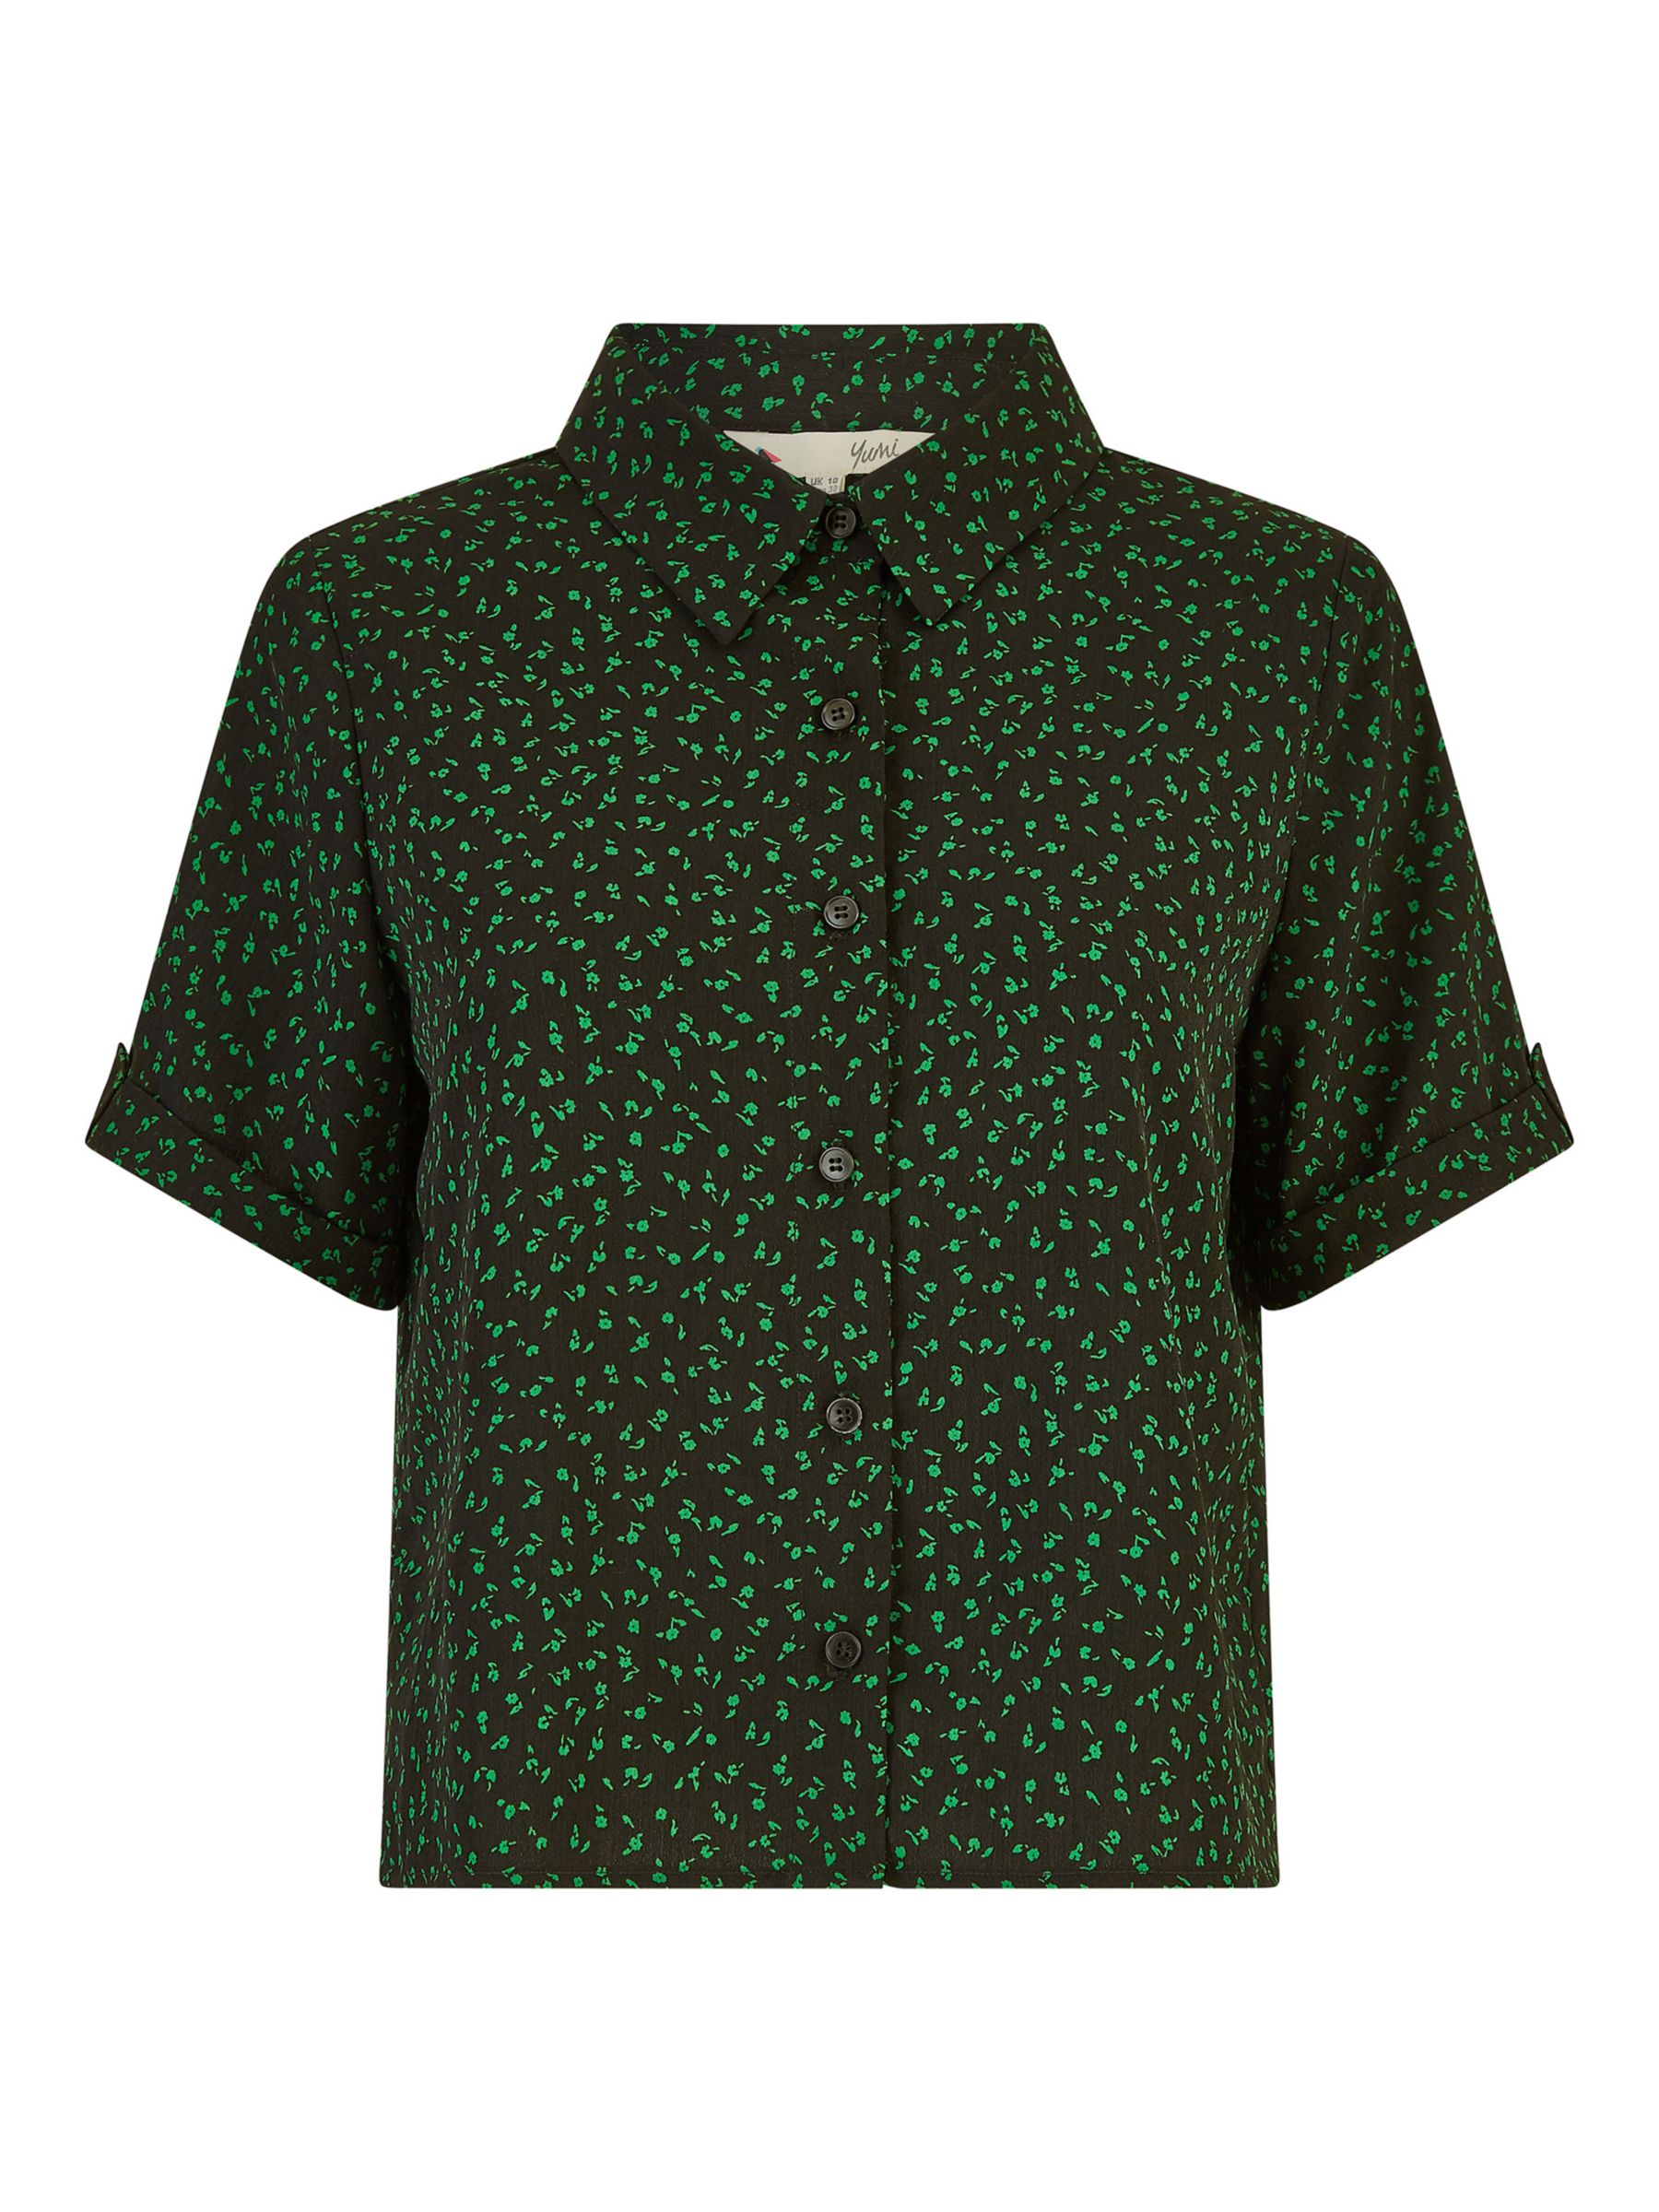 Yumi Ditsy Print Relaxed Fit Shirt, Black/Green, 10